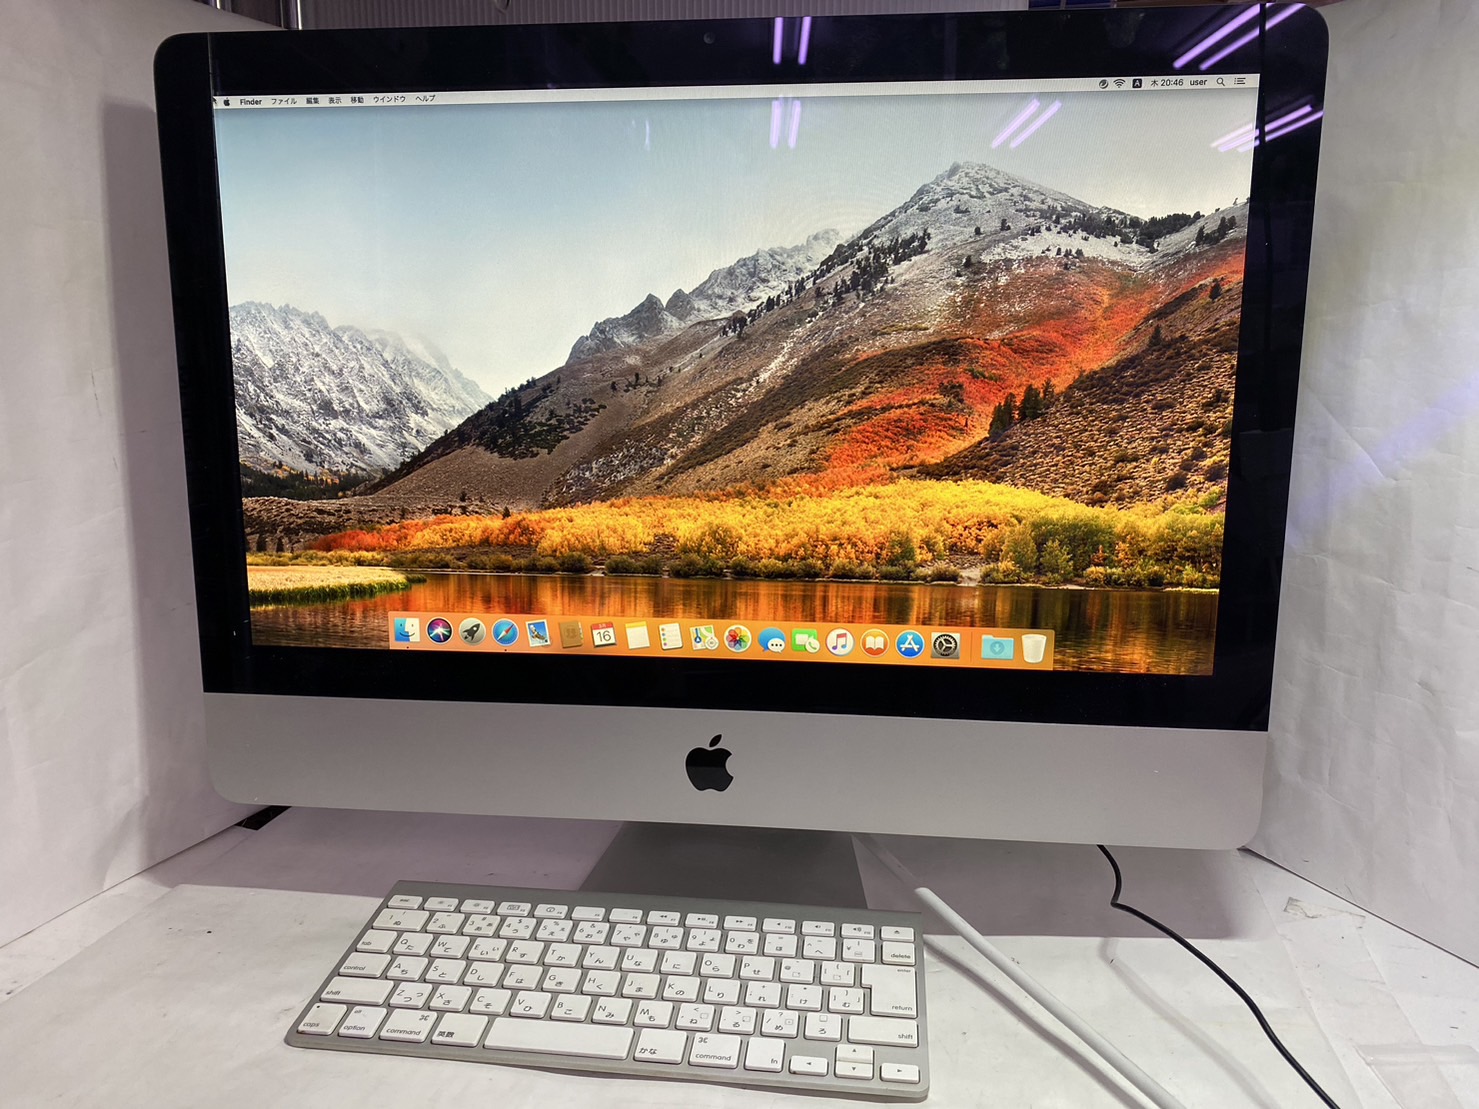 APPLE(アップル) iMac (21.5-inch, Mid 2010) MC509J/A A1311の激安